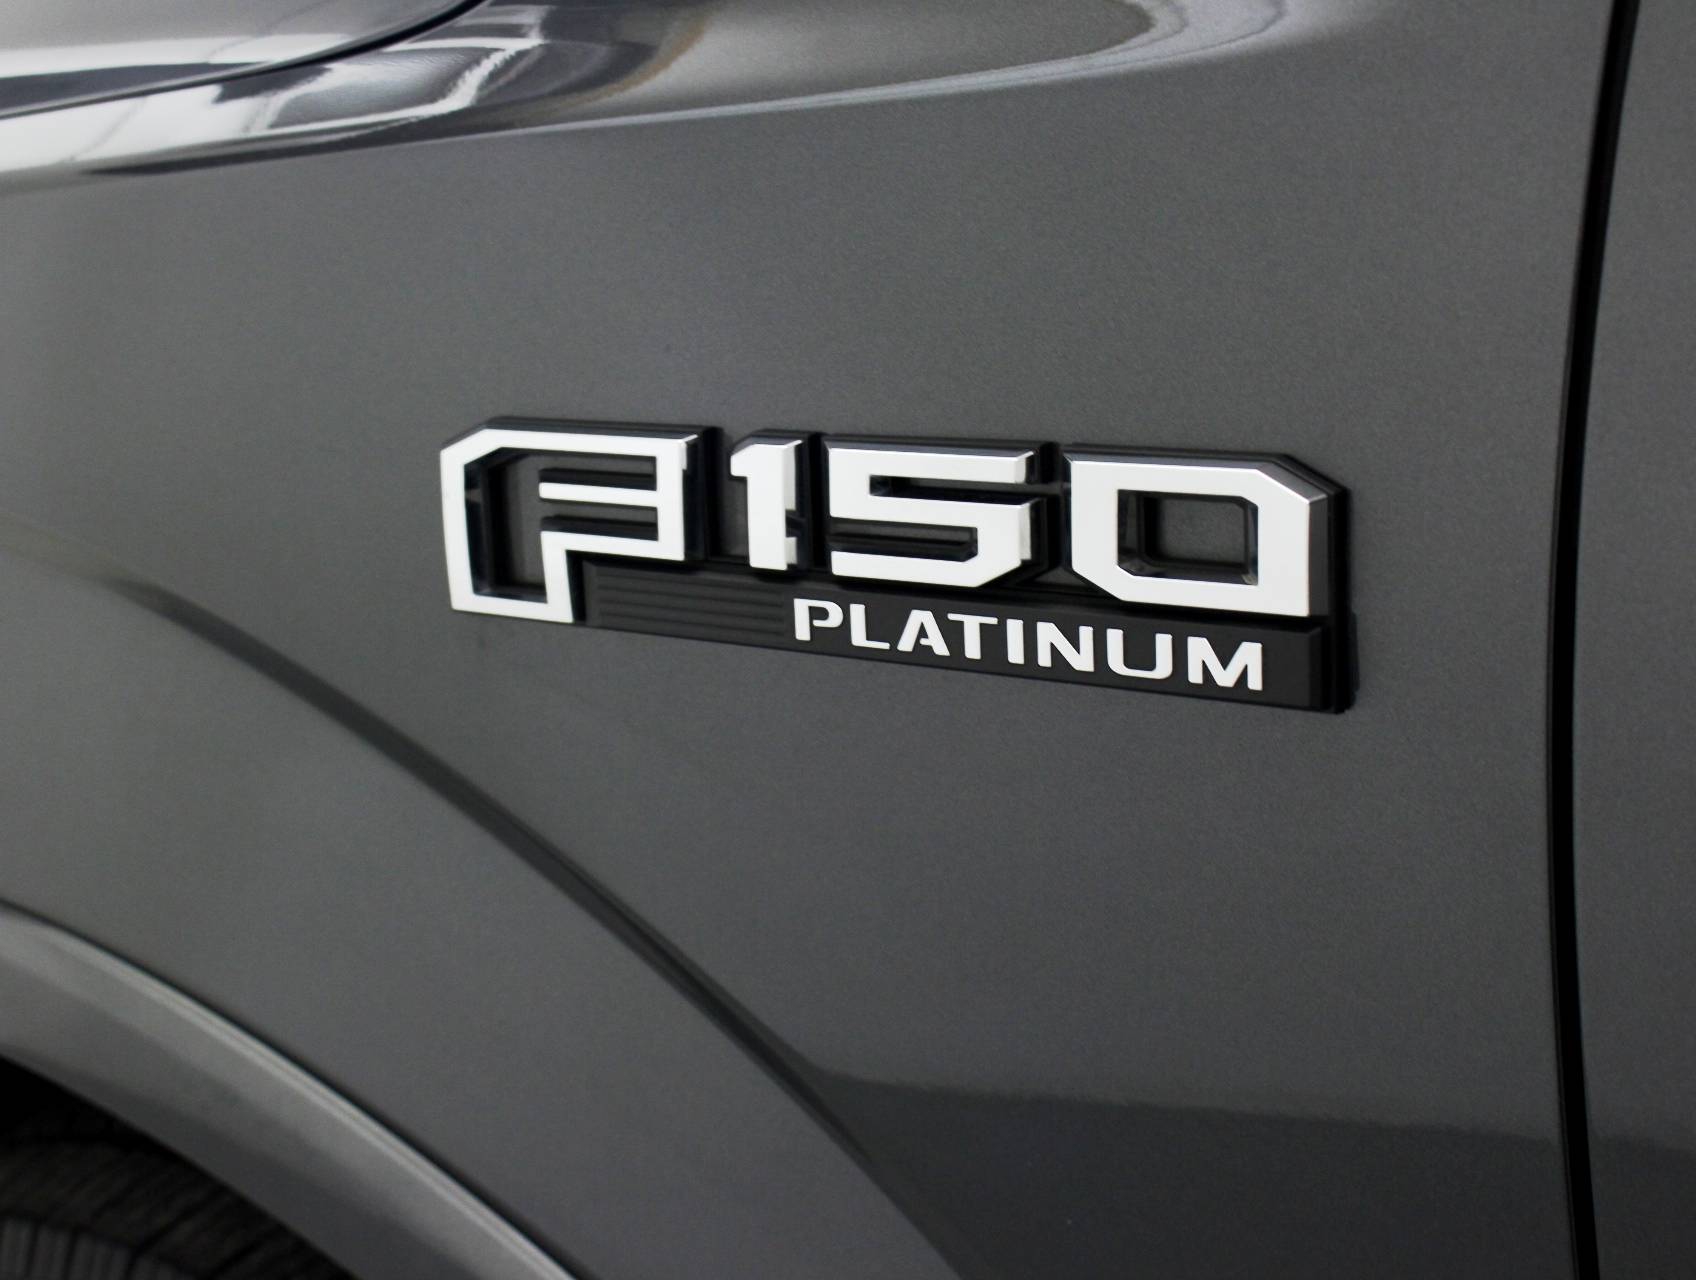 Florida Fine Cars - Used FORD F 150 2015 MIAMI Platinum